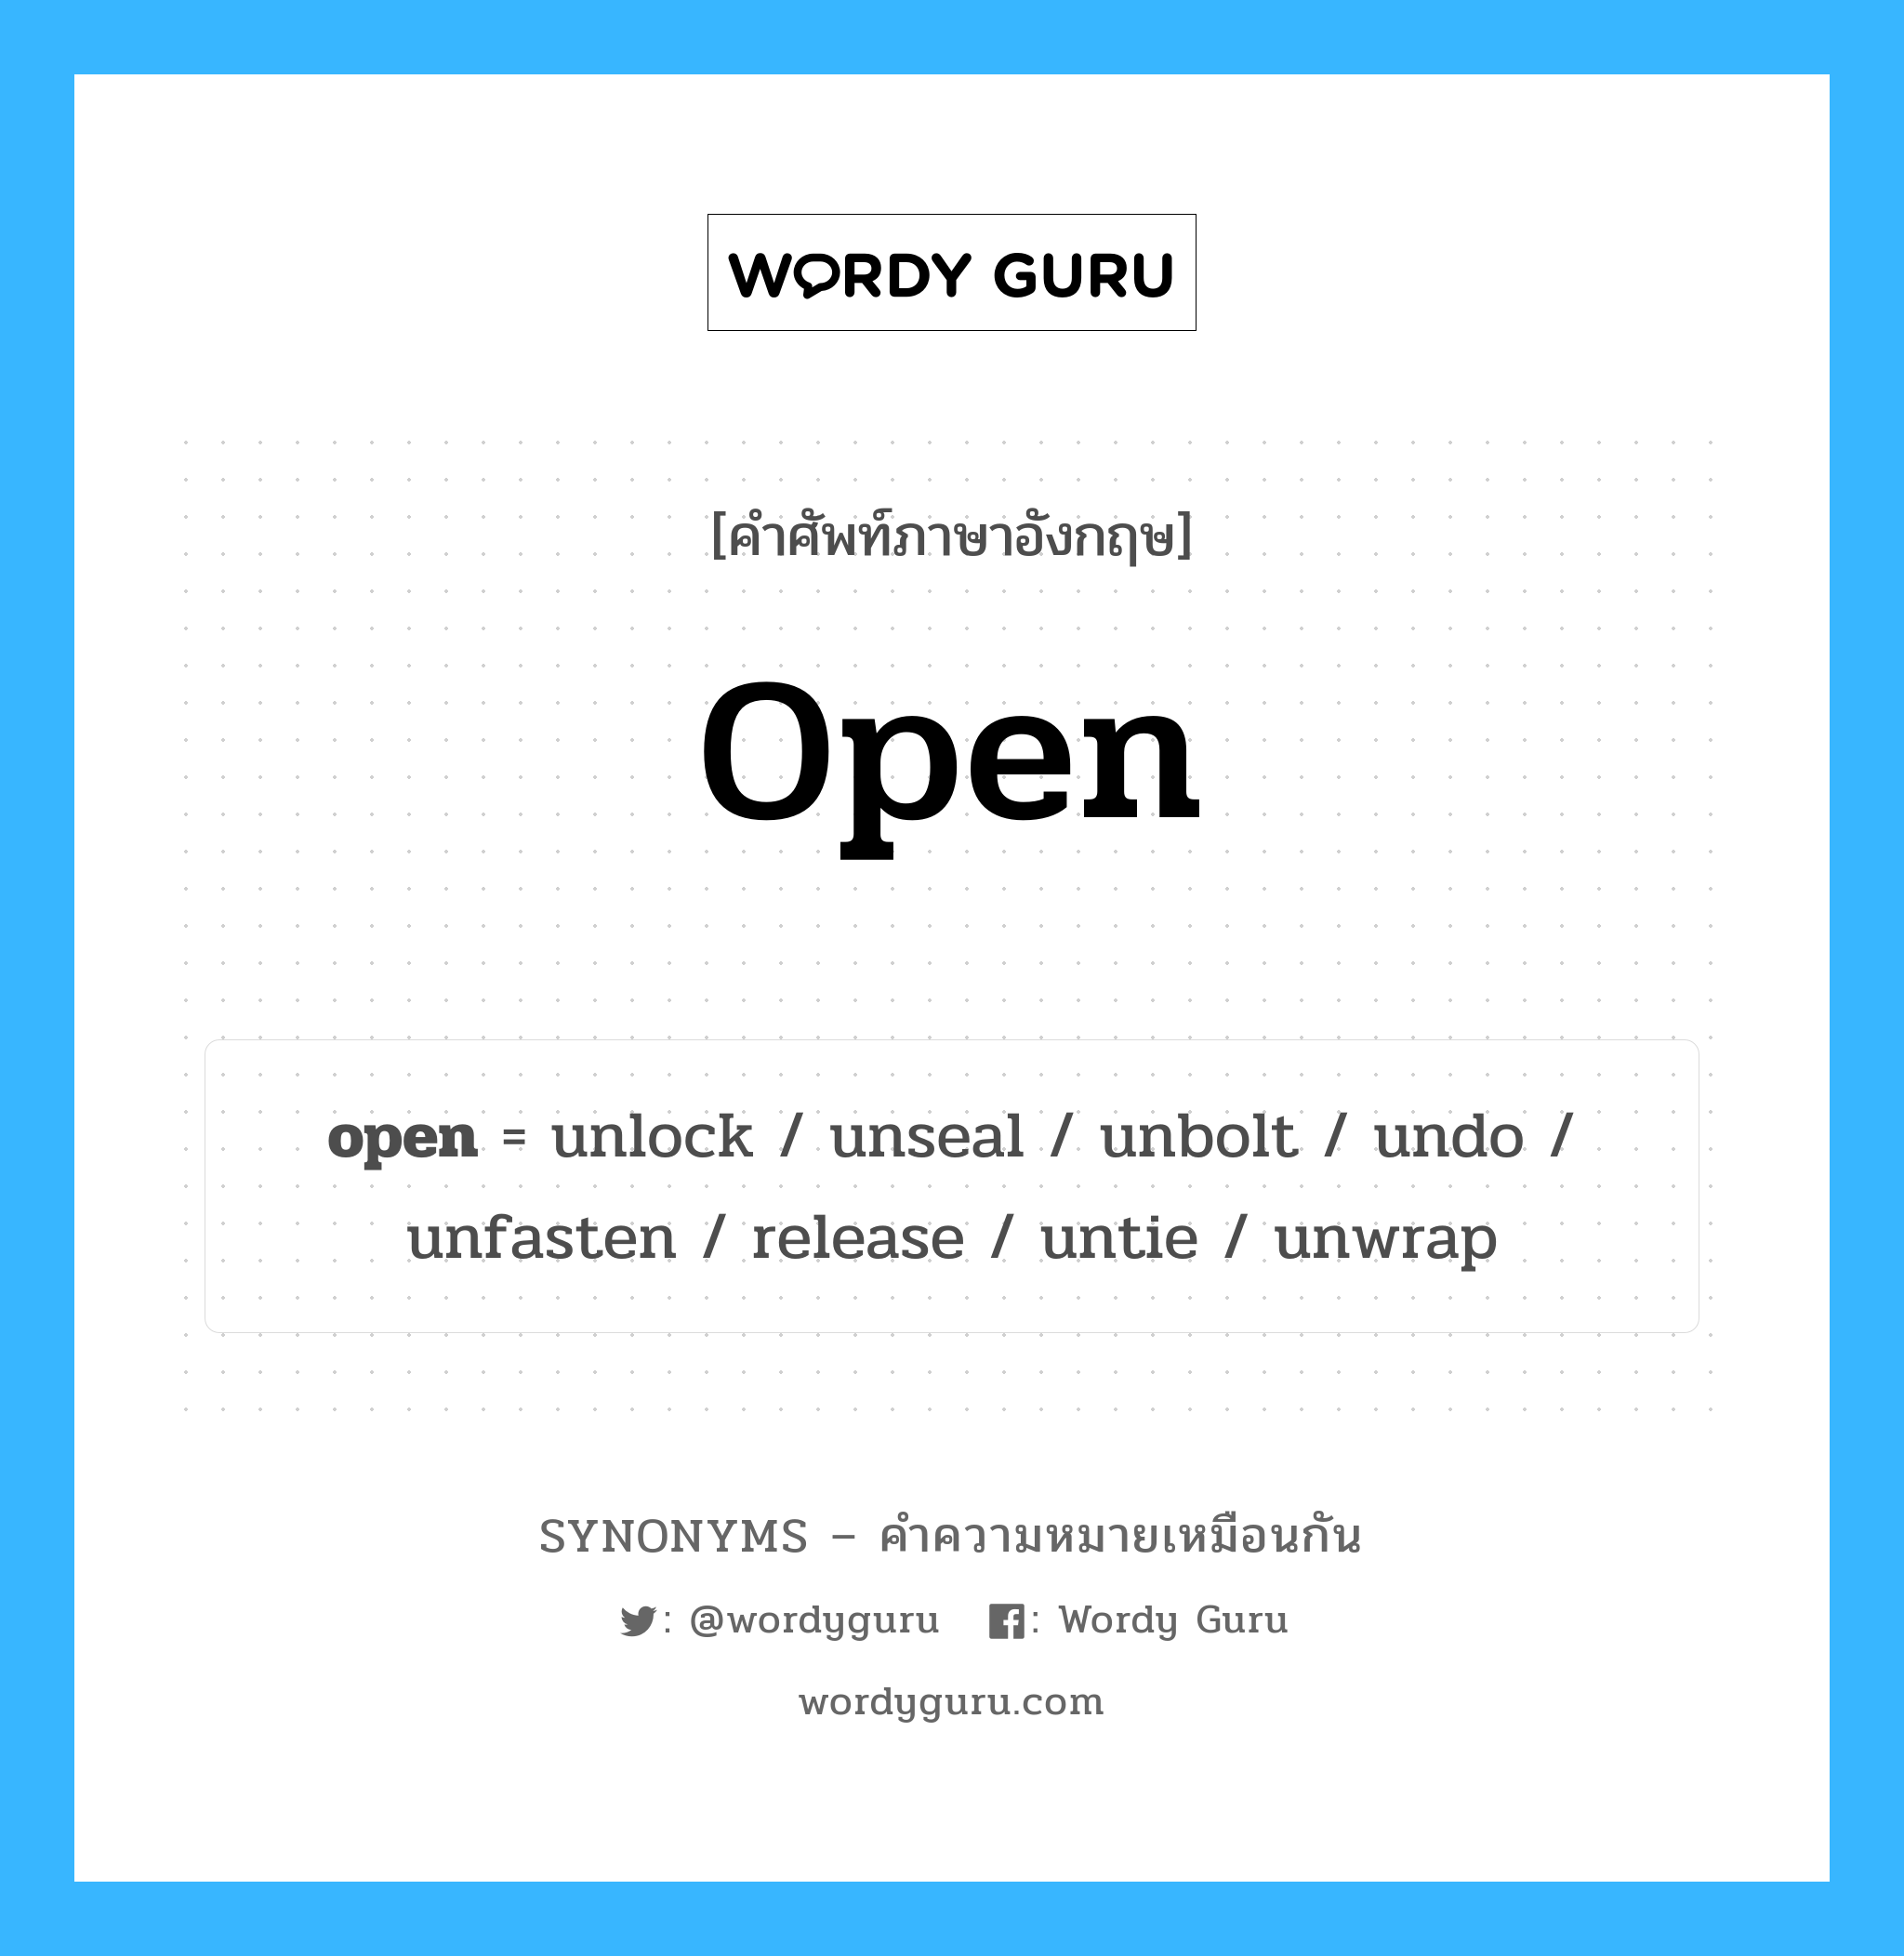 release เป็นหนึ่งใน open และมีคำอื่น ๆ อีกดังนี้, คำศัพท์ภาษาอังกฤษ release ความหมายคล้ายกันกับ open แปลว่า ปล่อย หมวด open